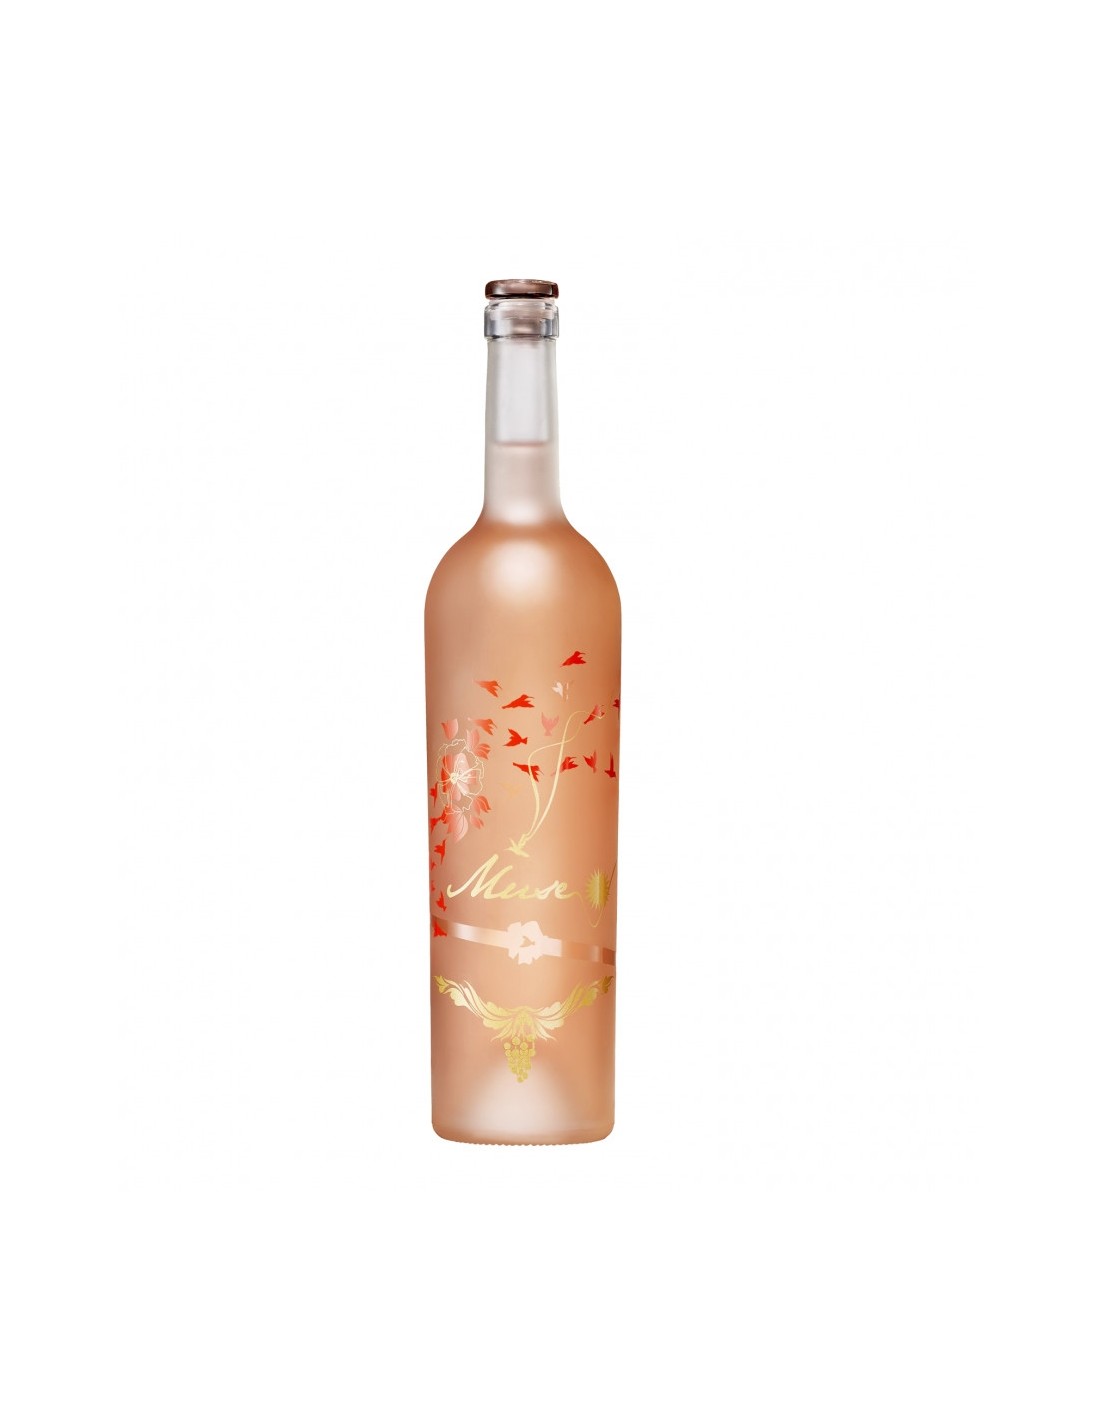 Vin roze sec, Cupaj, Muse Day Recas, 0.75L, 12.5% alc., Romania alcooldiscount.ro